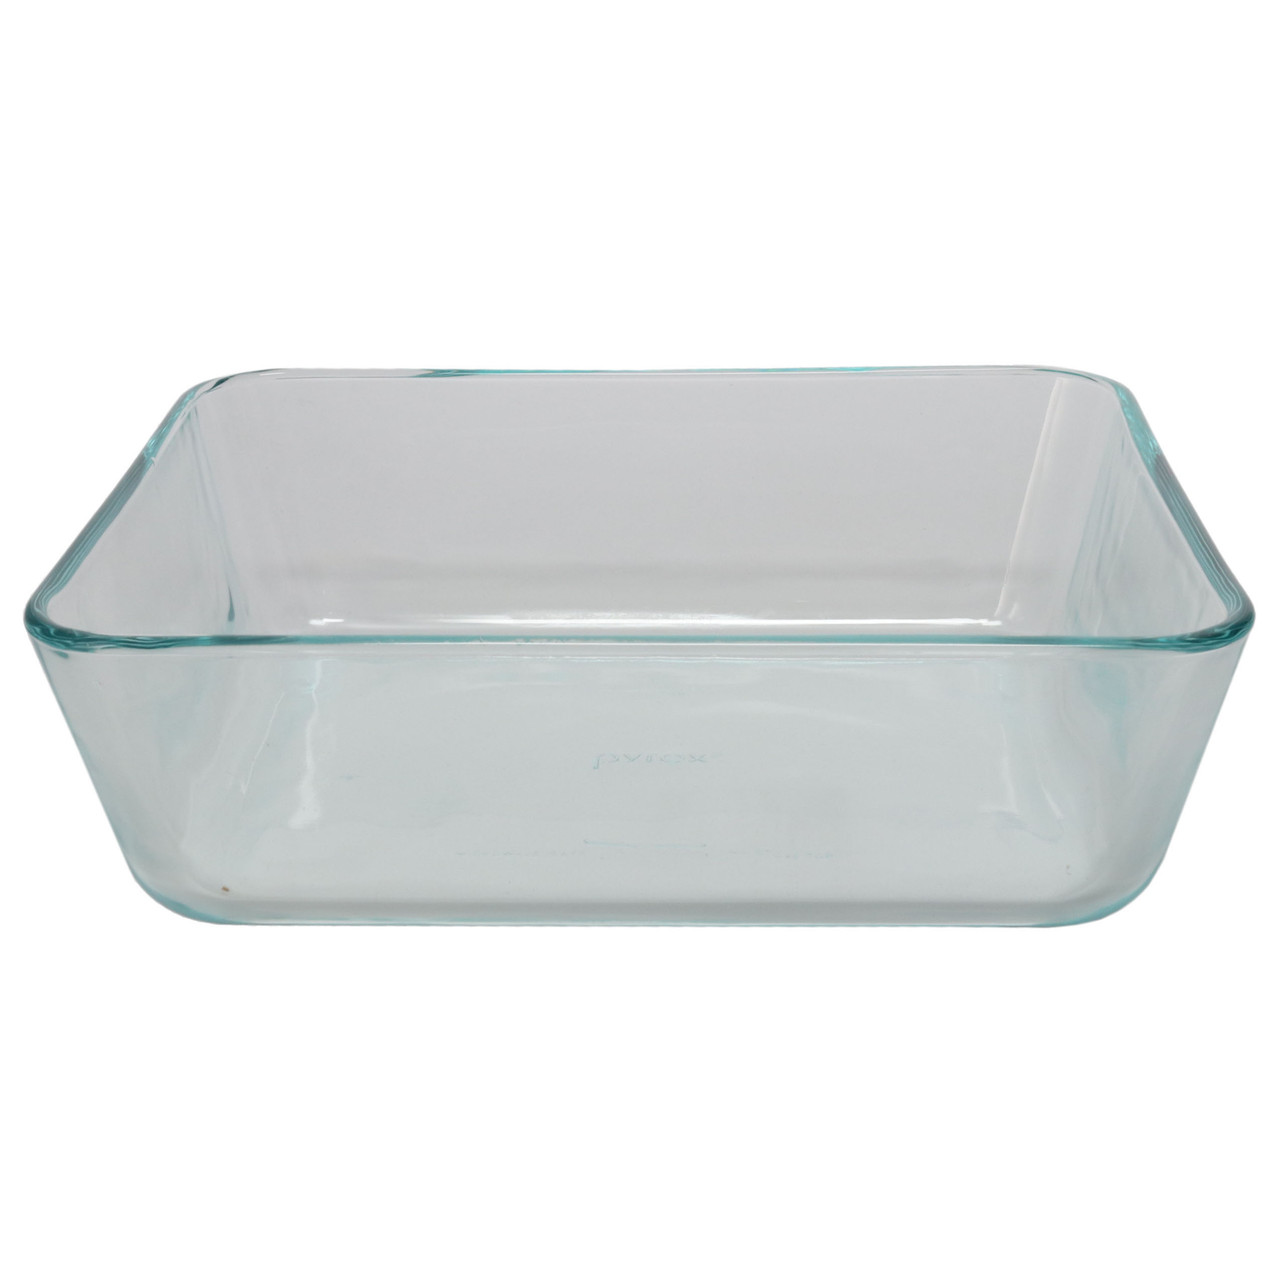 Pyrex Simply Store Rectangular Glass Food Storage Dish, 11-Cup